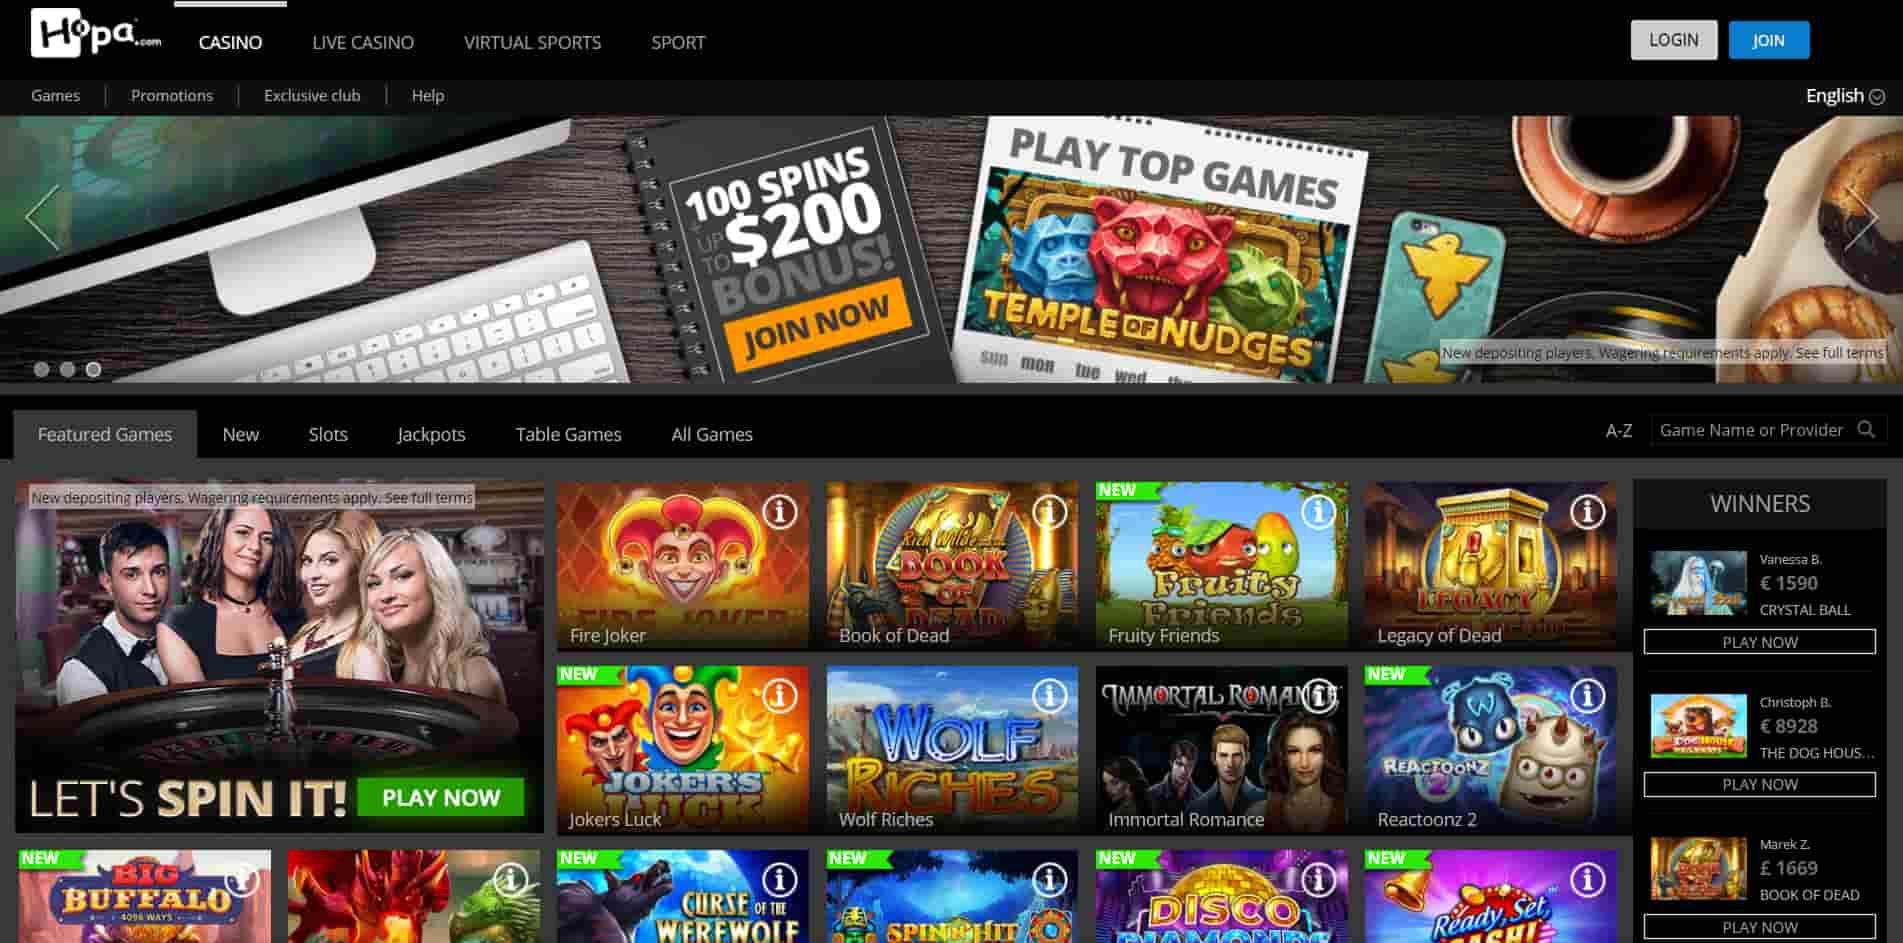 Hopa casino homepage